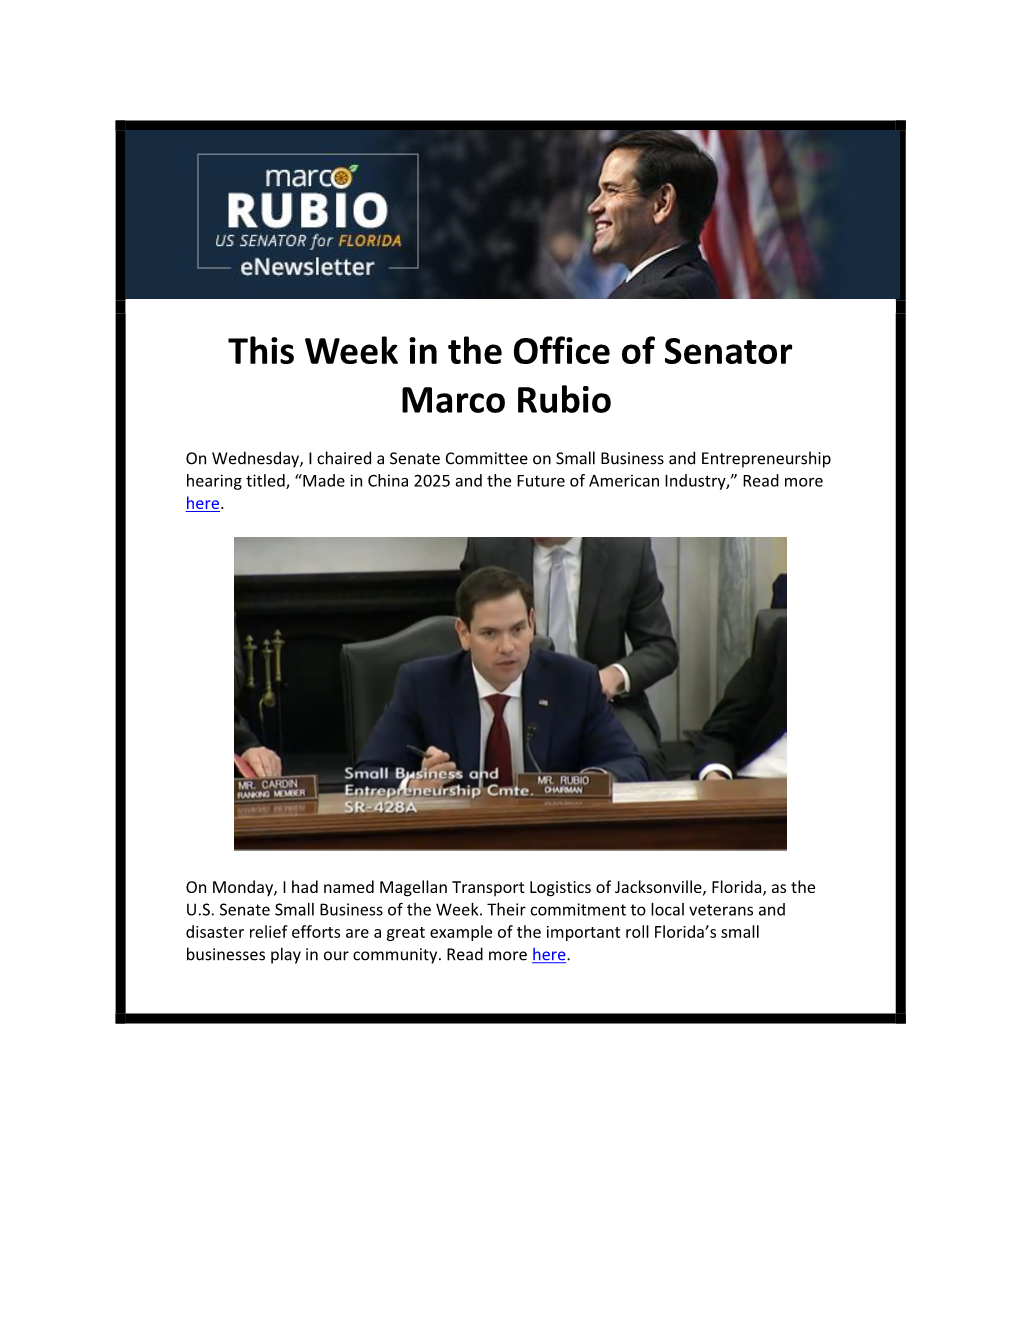 This Week in the Office of Senator Marco Rubio